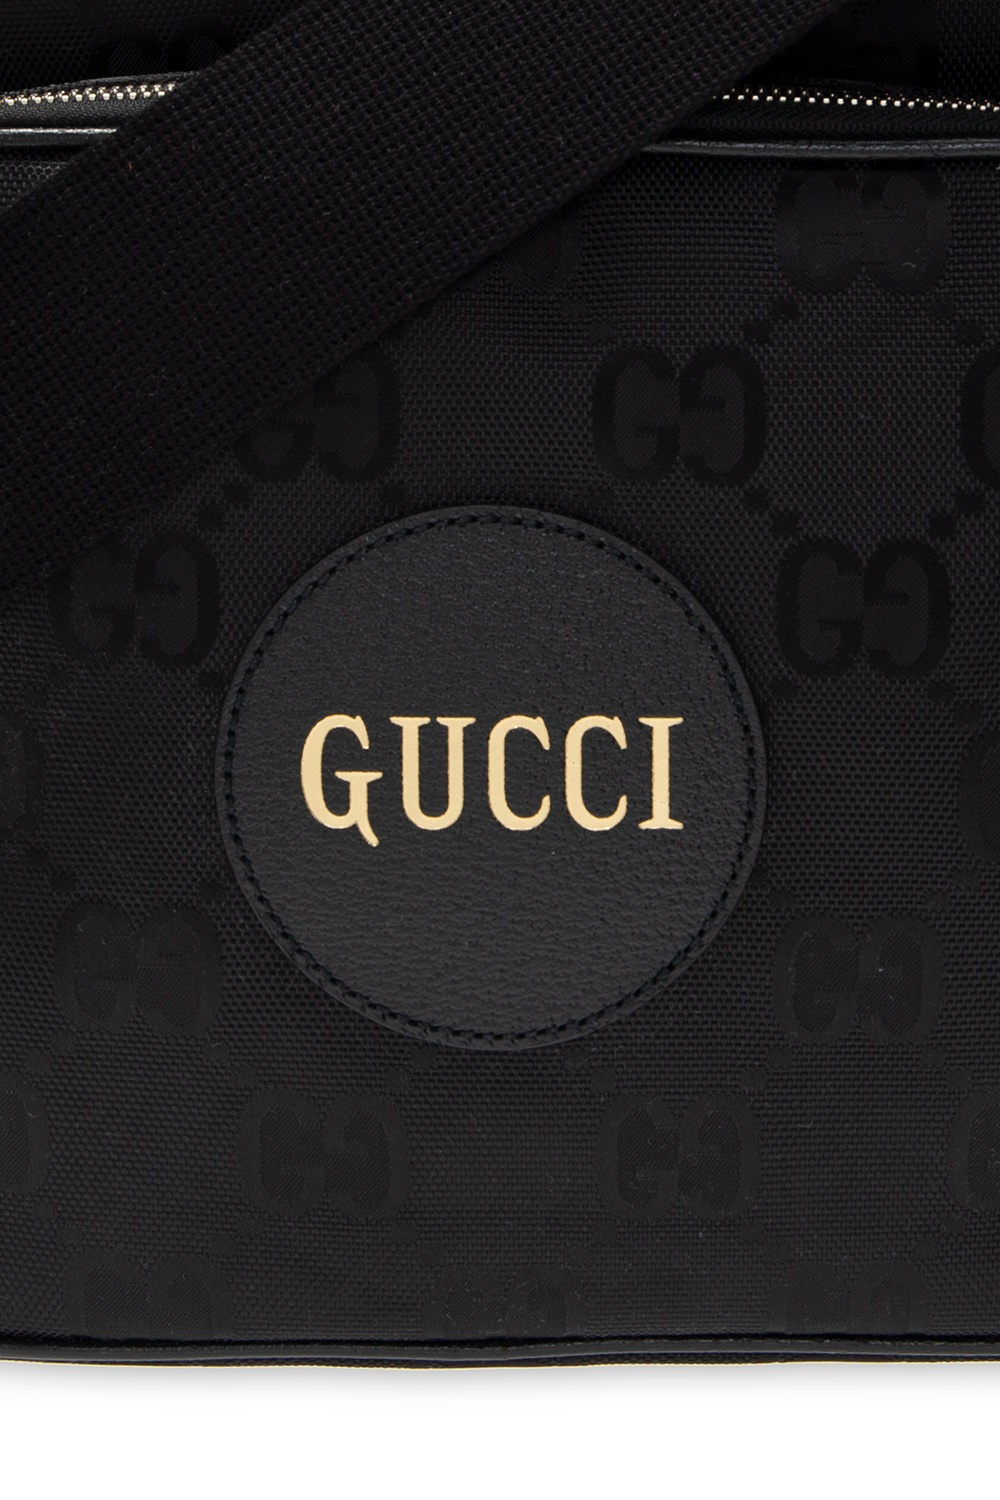 Gucci patched socks gucci sock